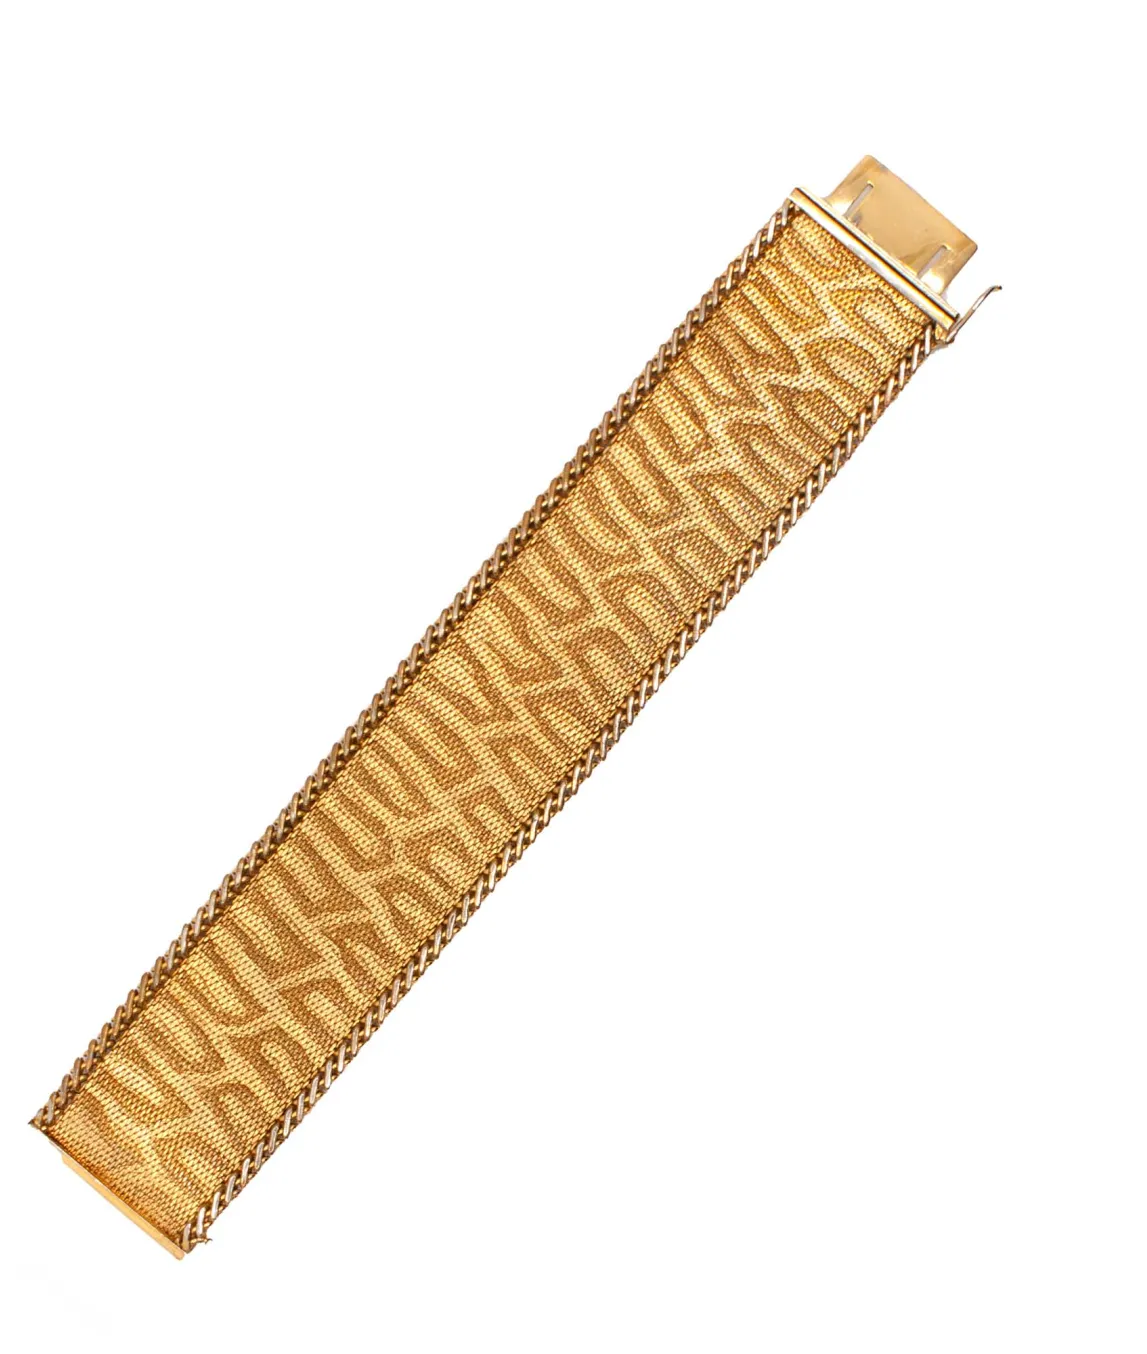 Gold tone animal print woven bracelet laying flat